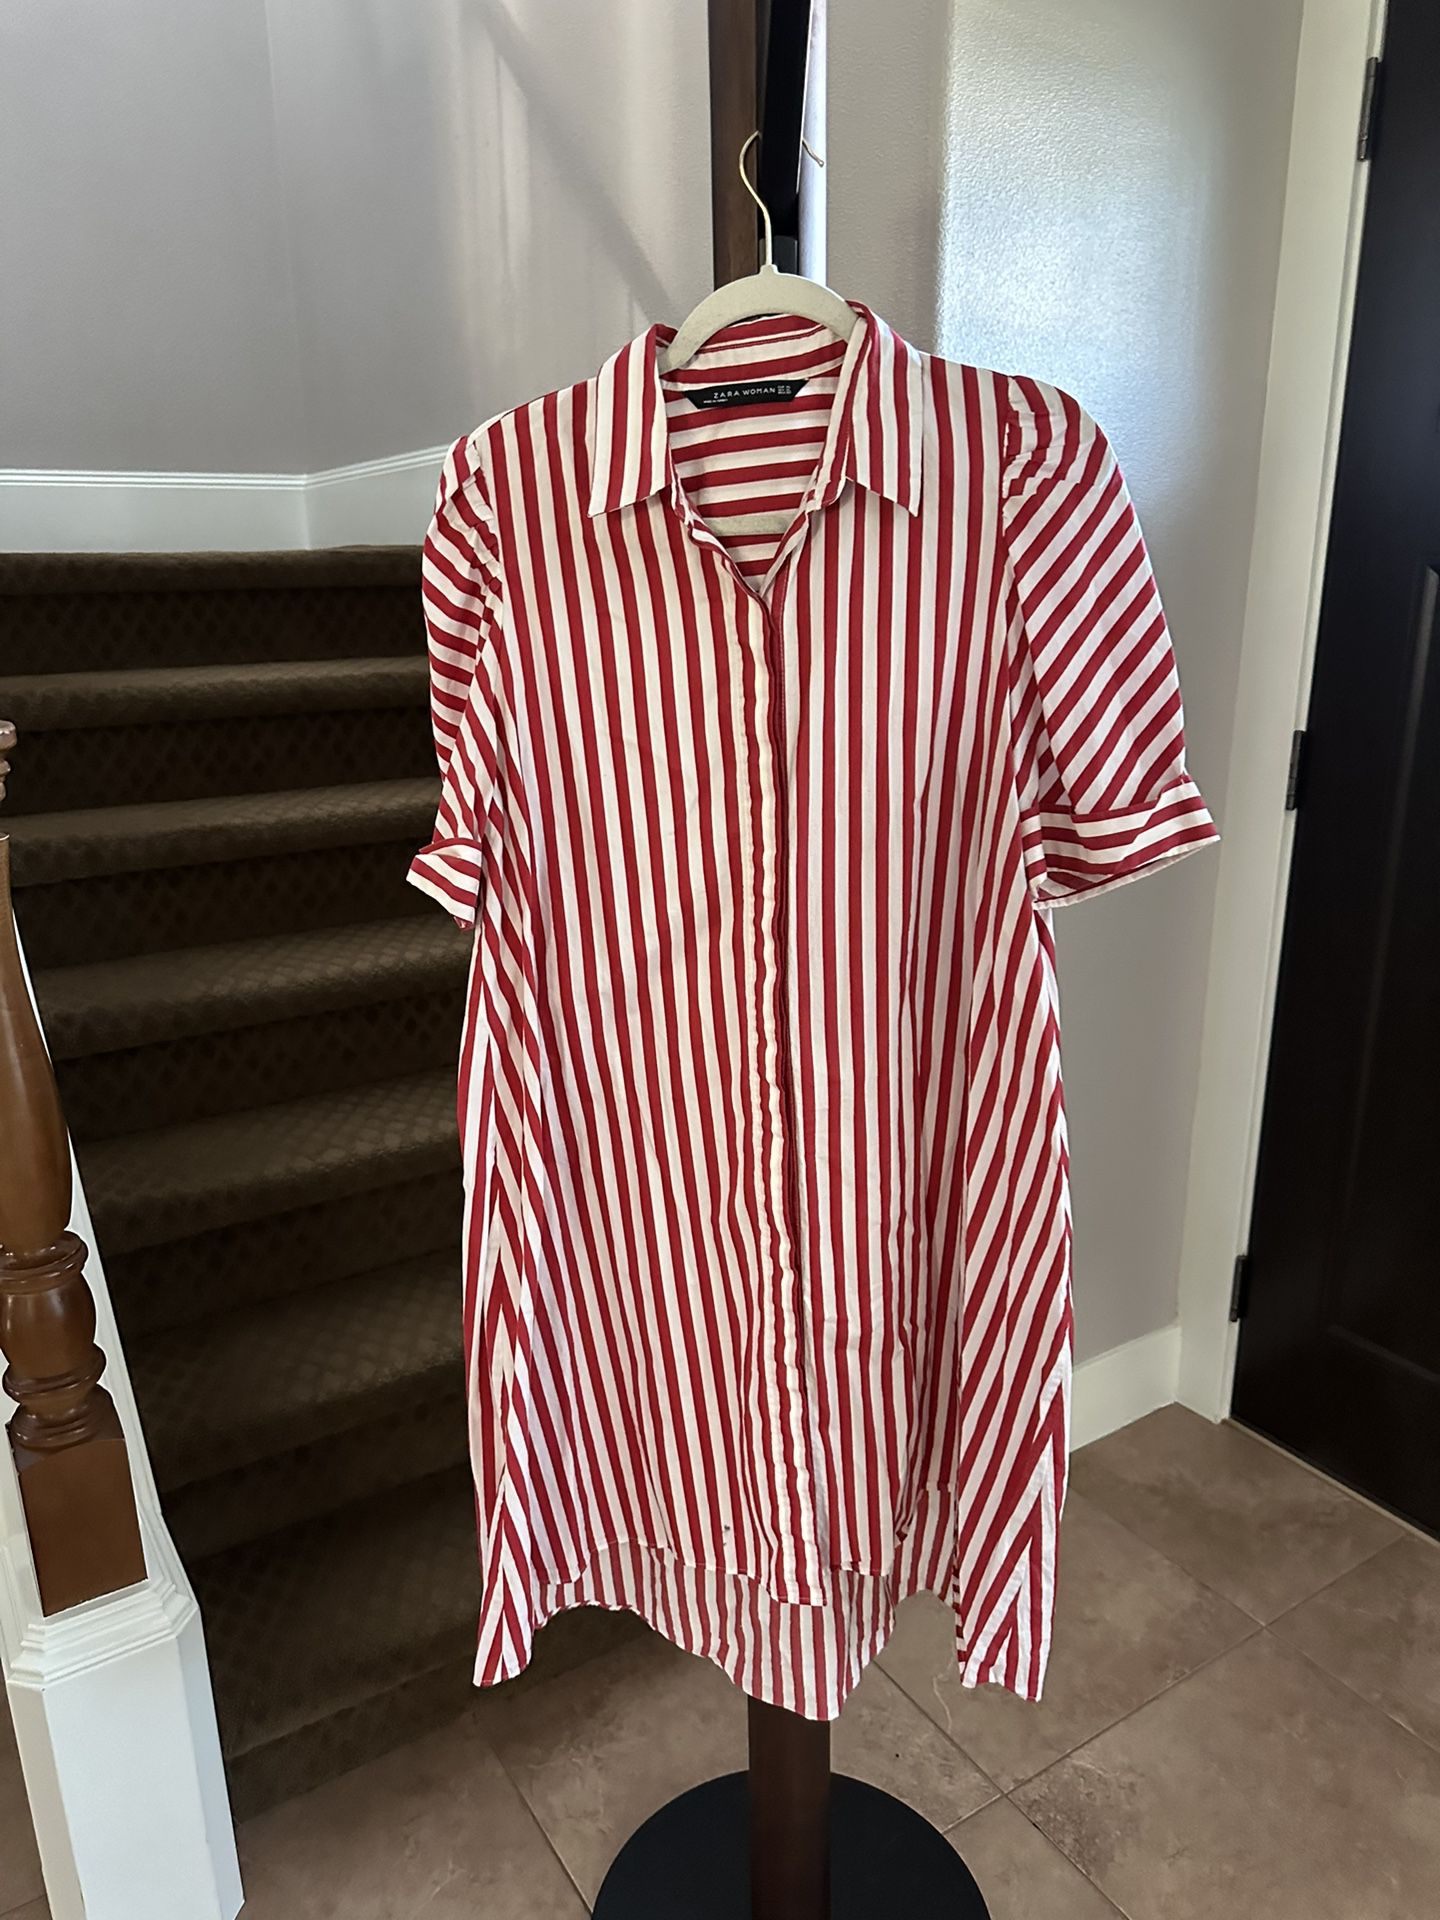 Zara Red & White Pin Striped Shirt Dress